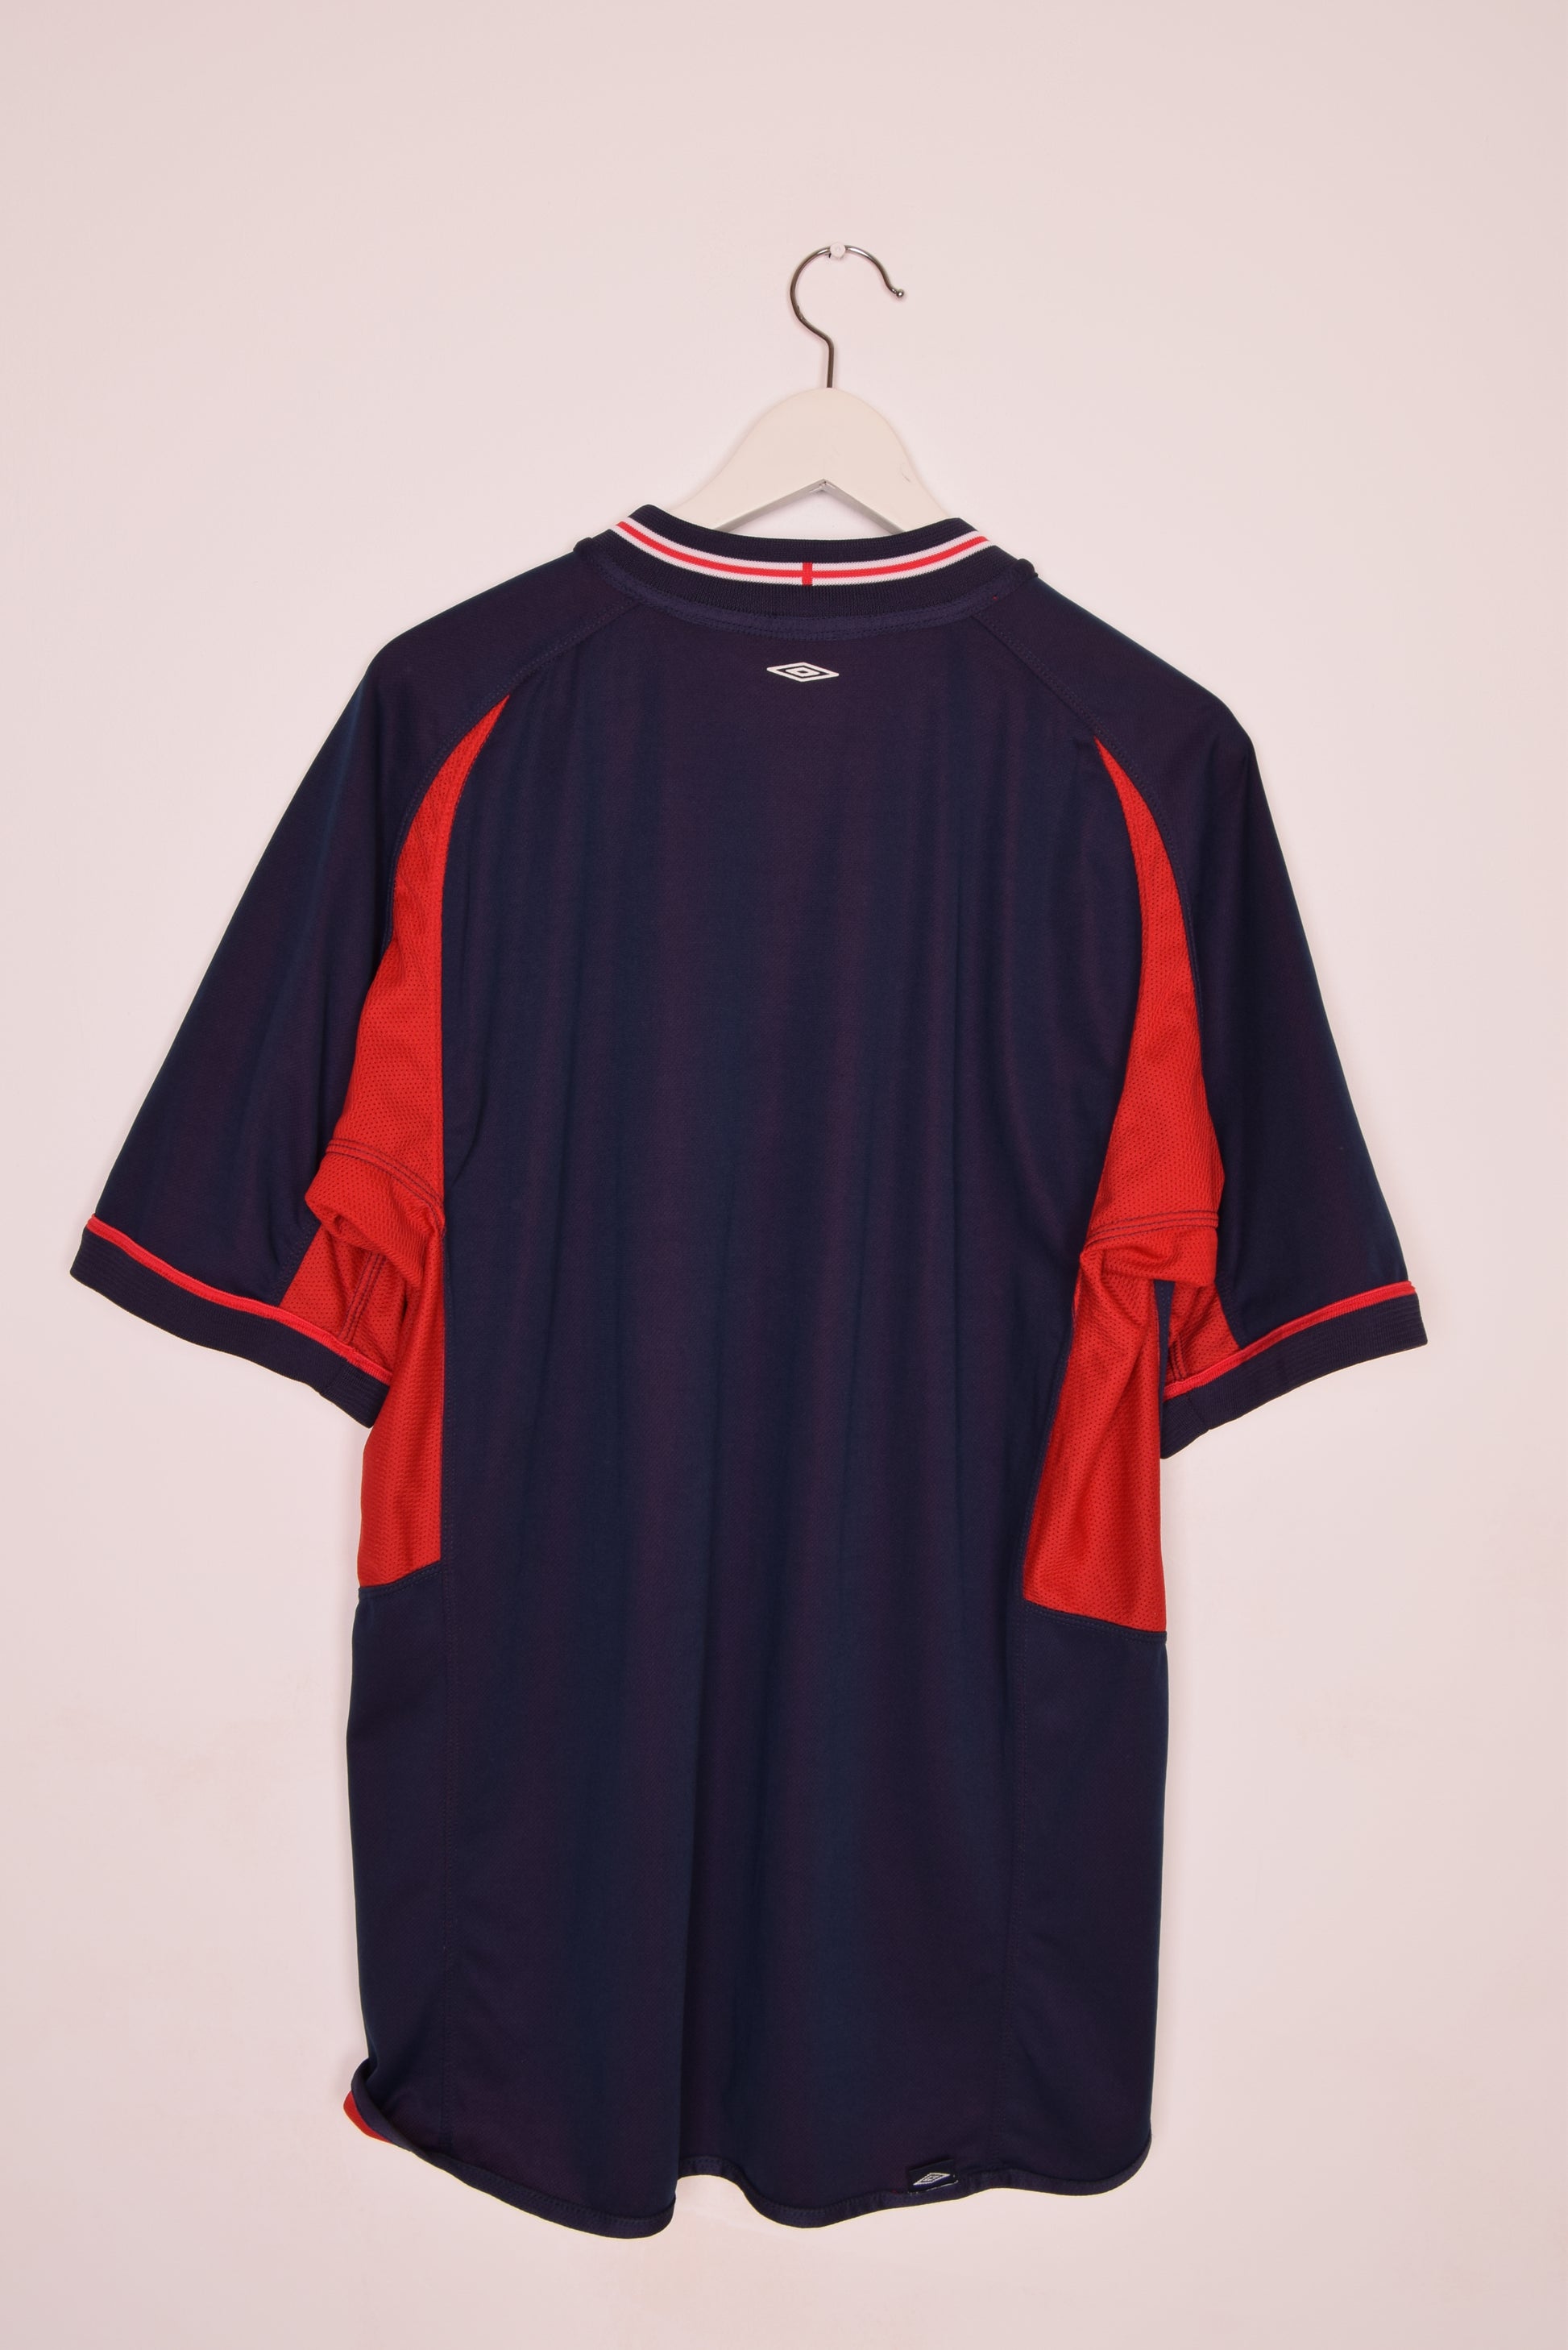 Umbro England 2002 - 2004 Reversible Football Shirt